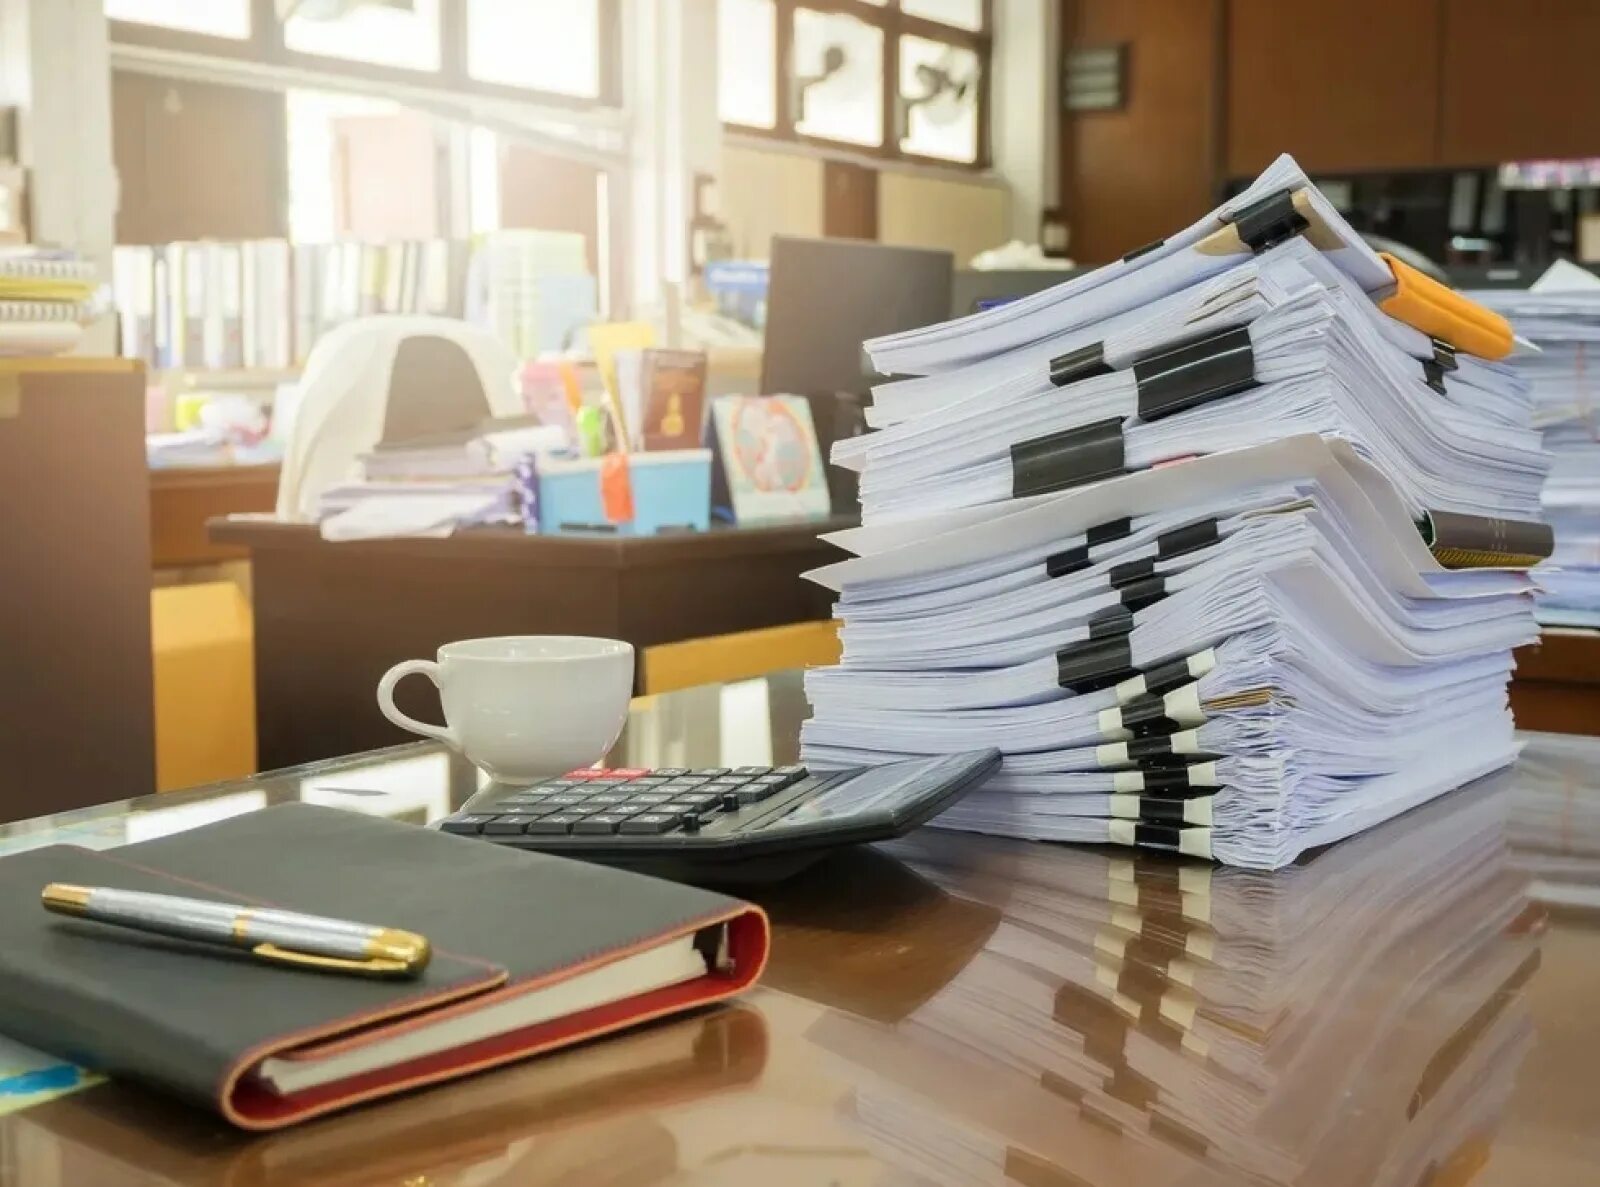 Бумаги на столе. Много бумаг на столе. Бумага для офиса. Стопка документов на столе в офисе. Office papers